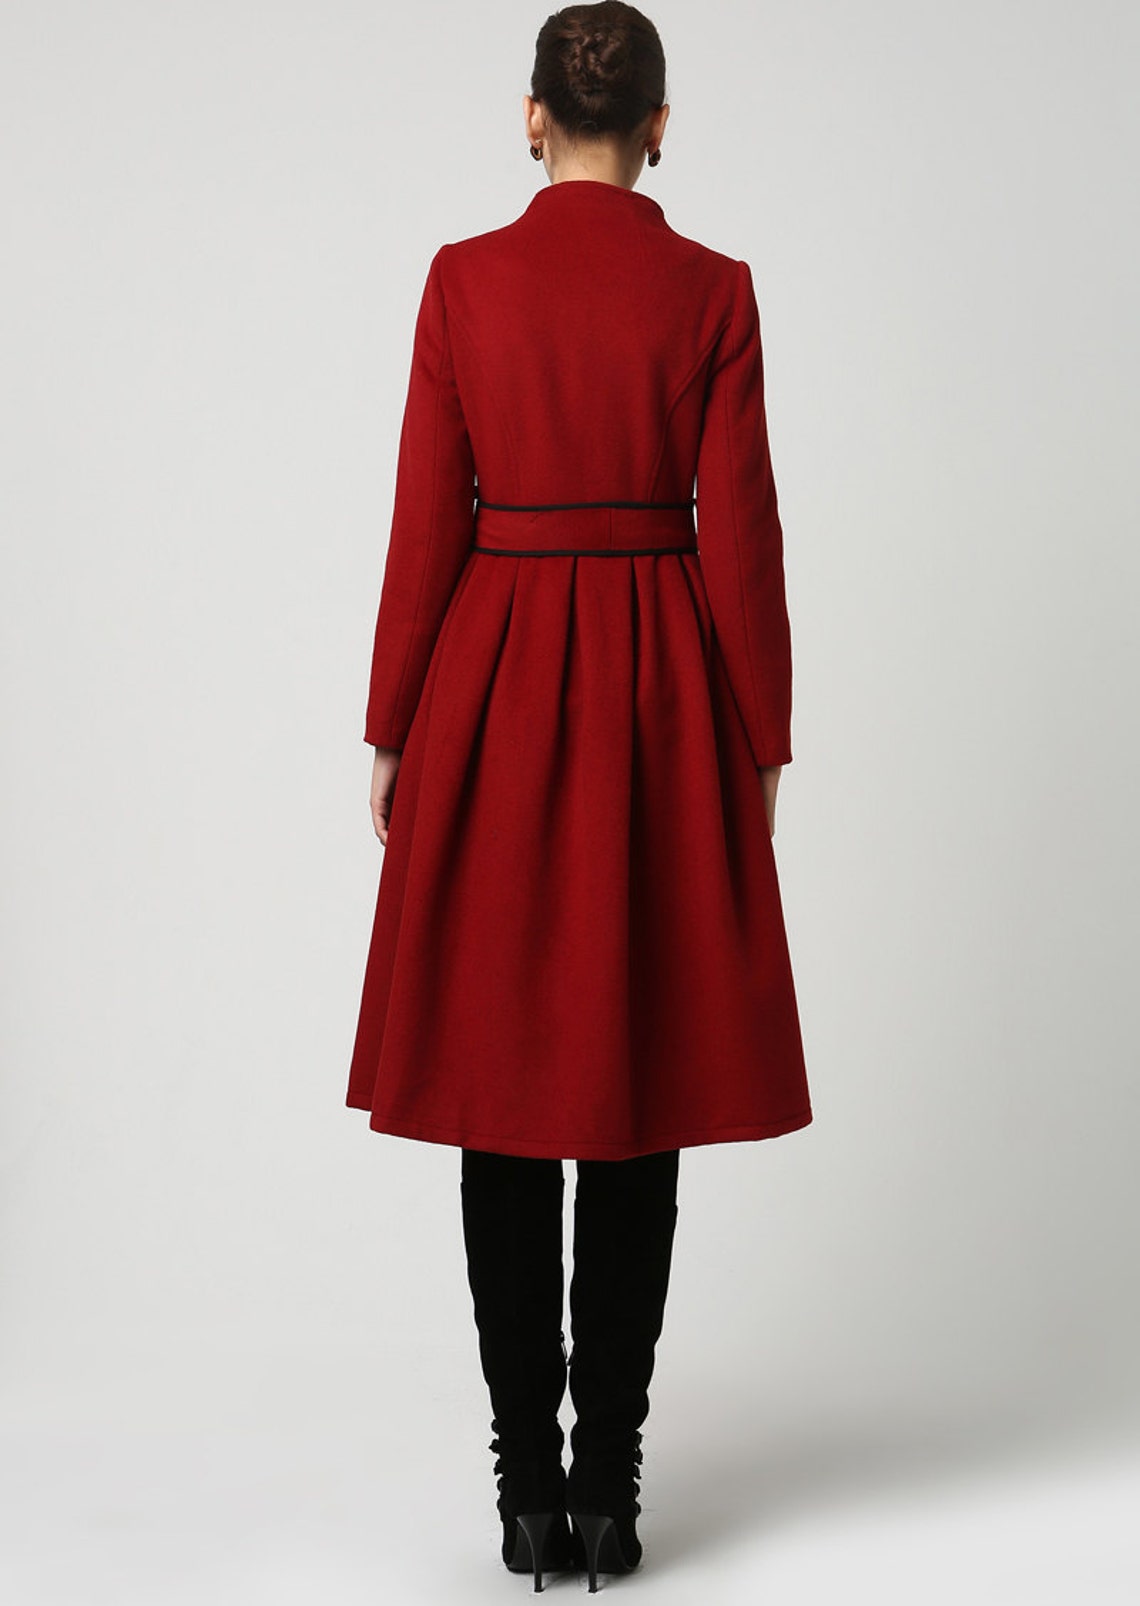 Dark red coat stand up collar wool coat winter coat for | Etsy